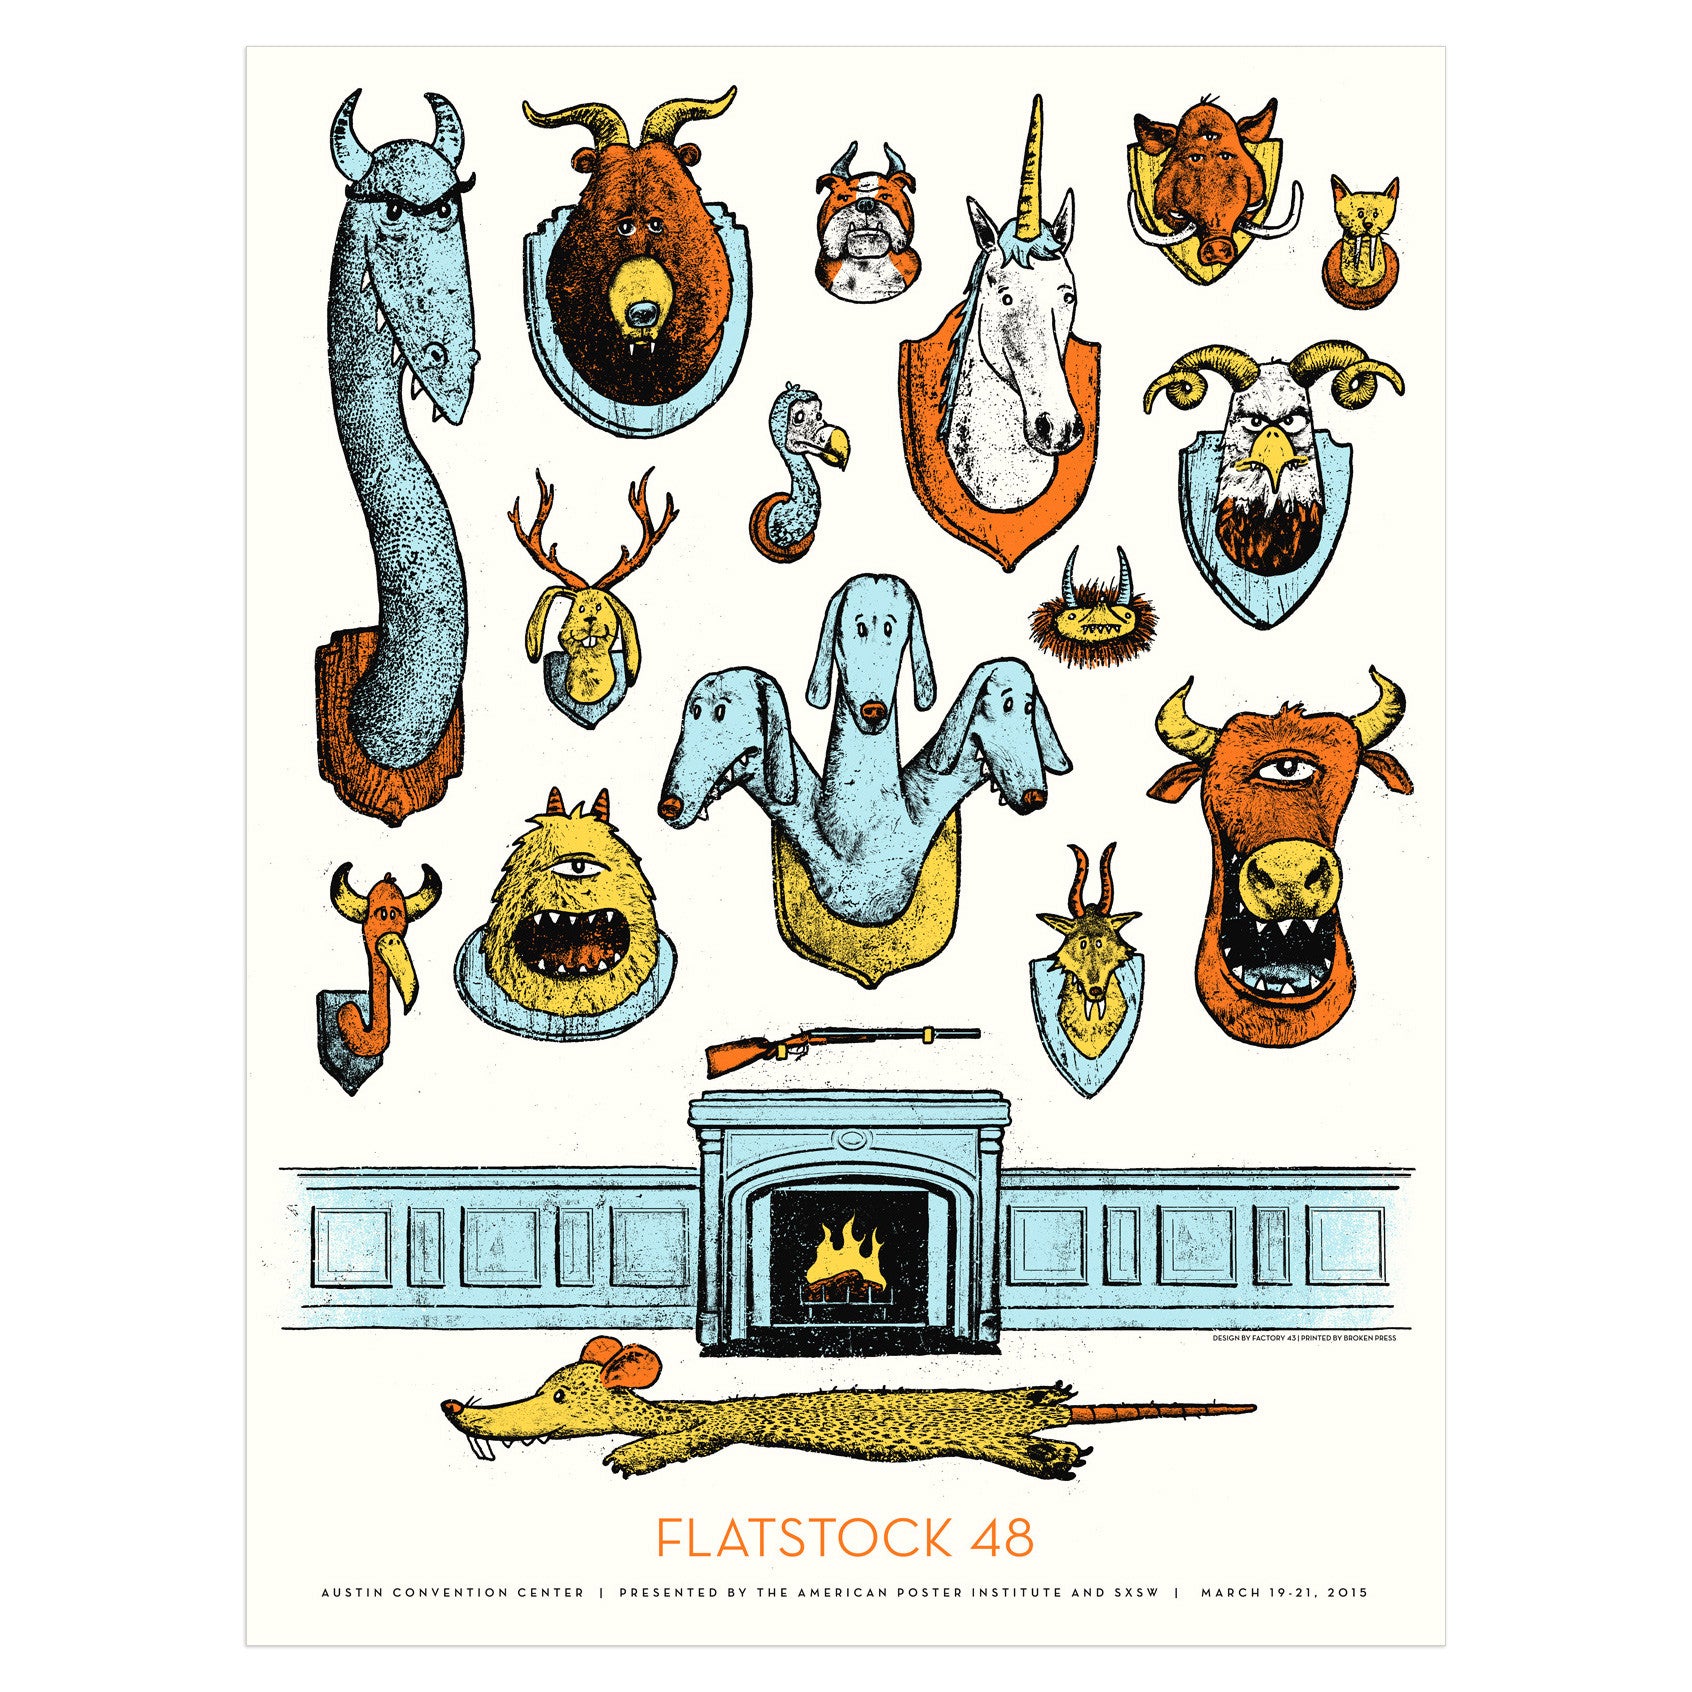 Flatstock 48 poster